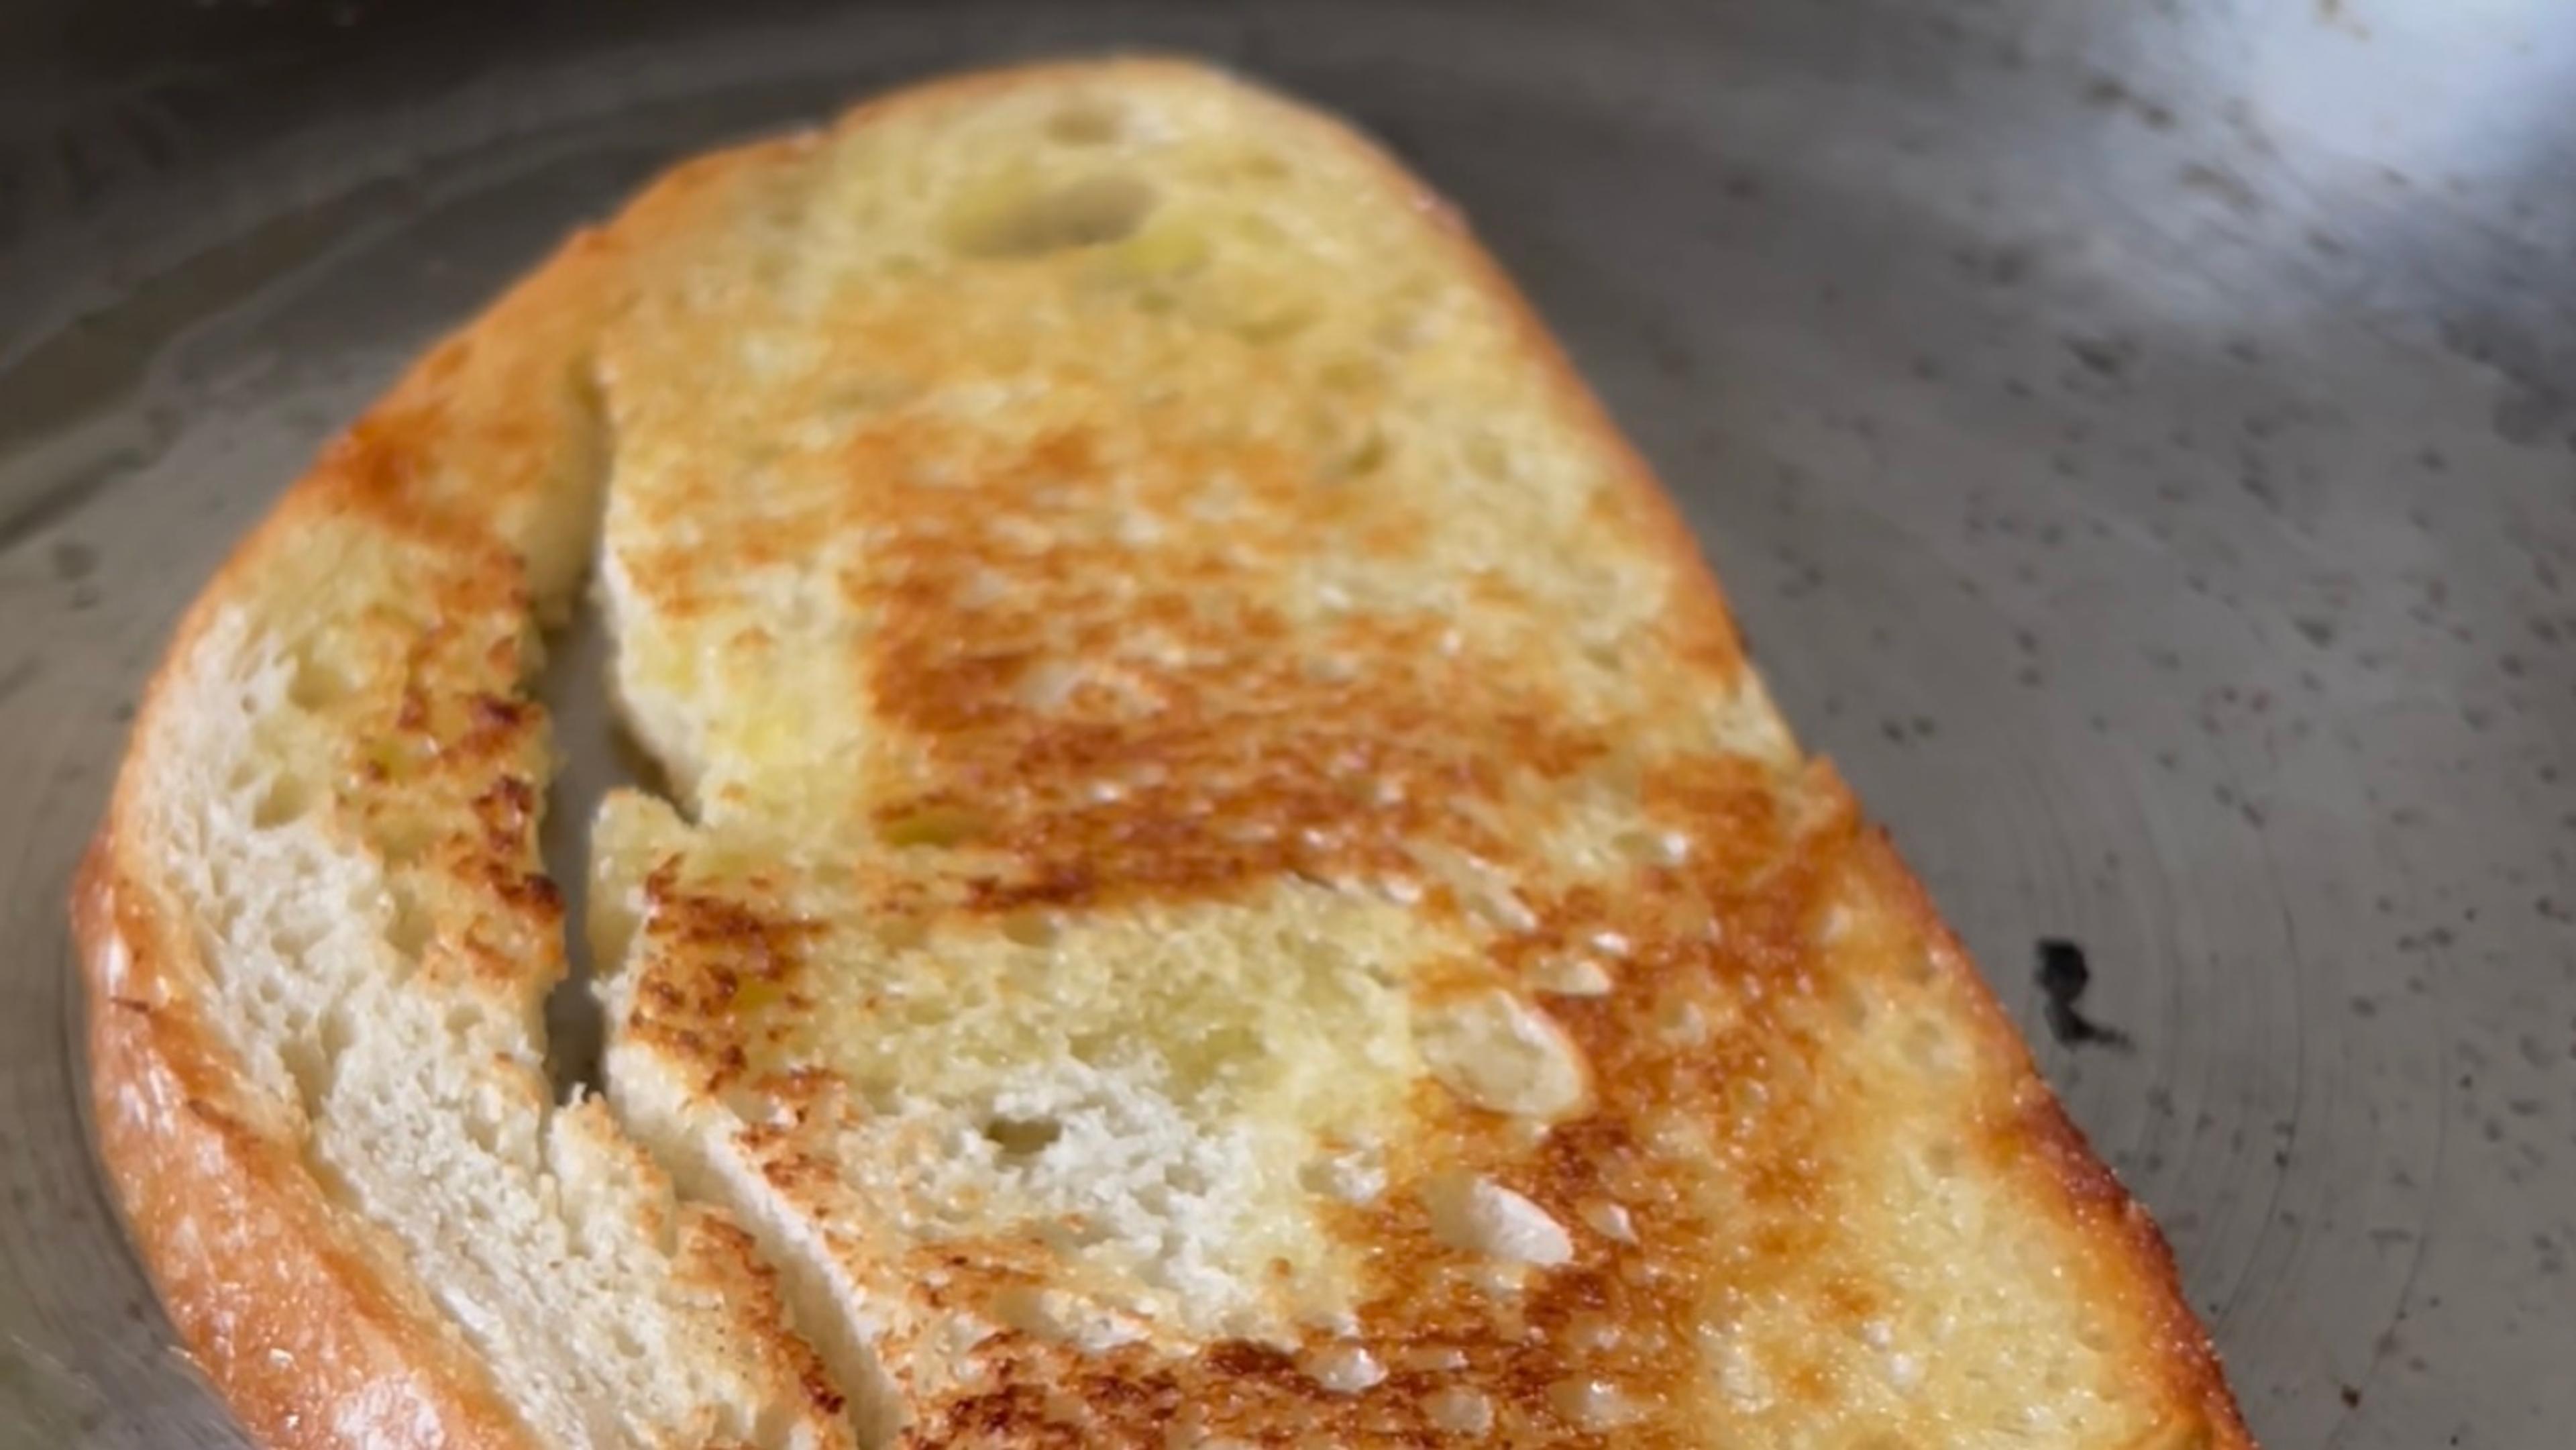 Sourdough bread toasting in oil in a skillet.